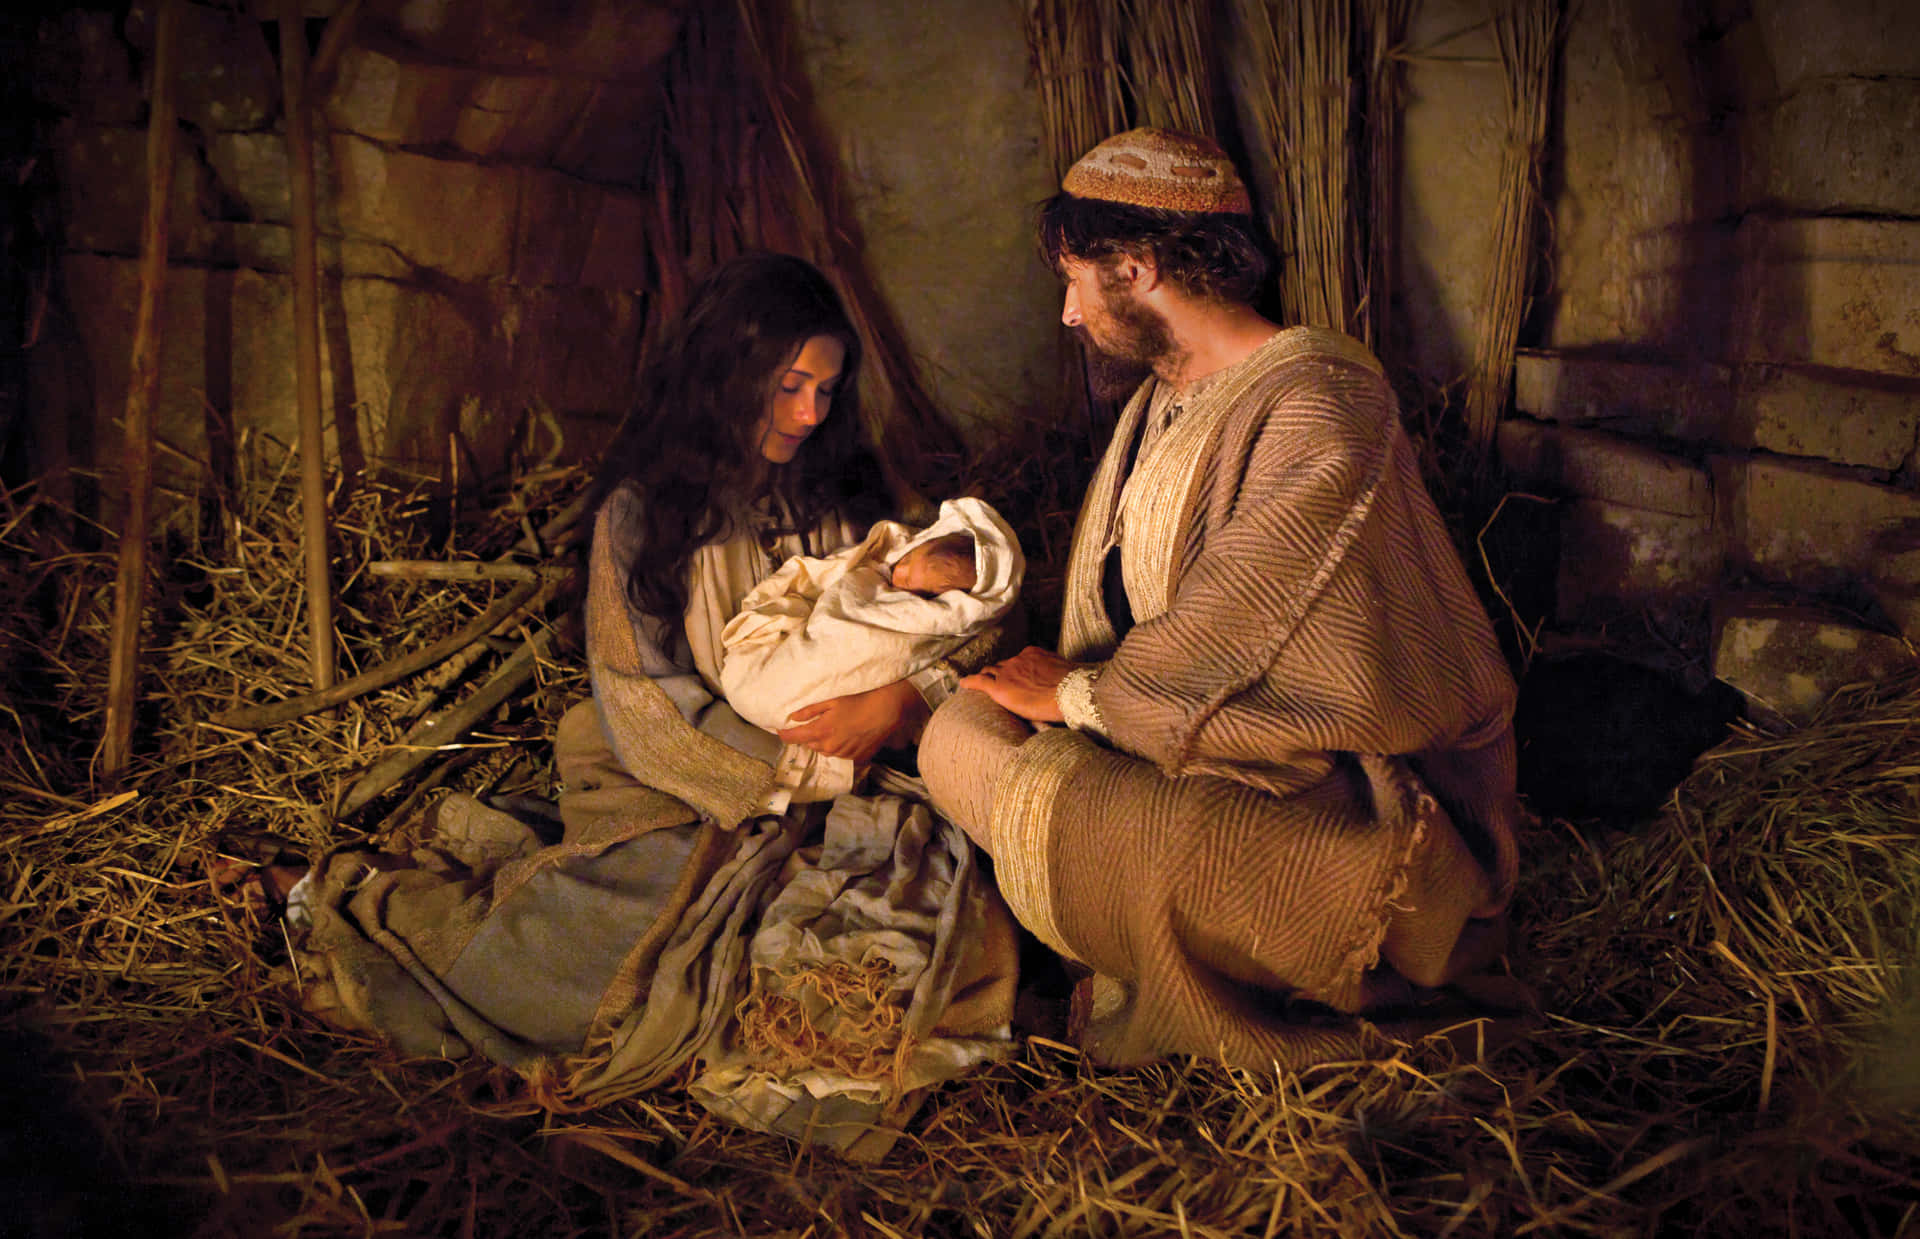 The Nativity Scene – the Birth of Jesus